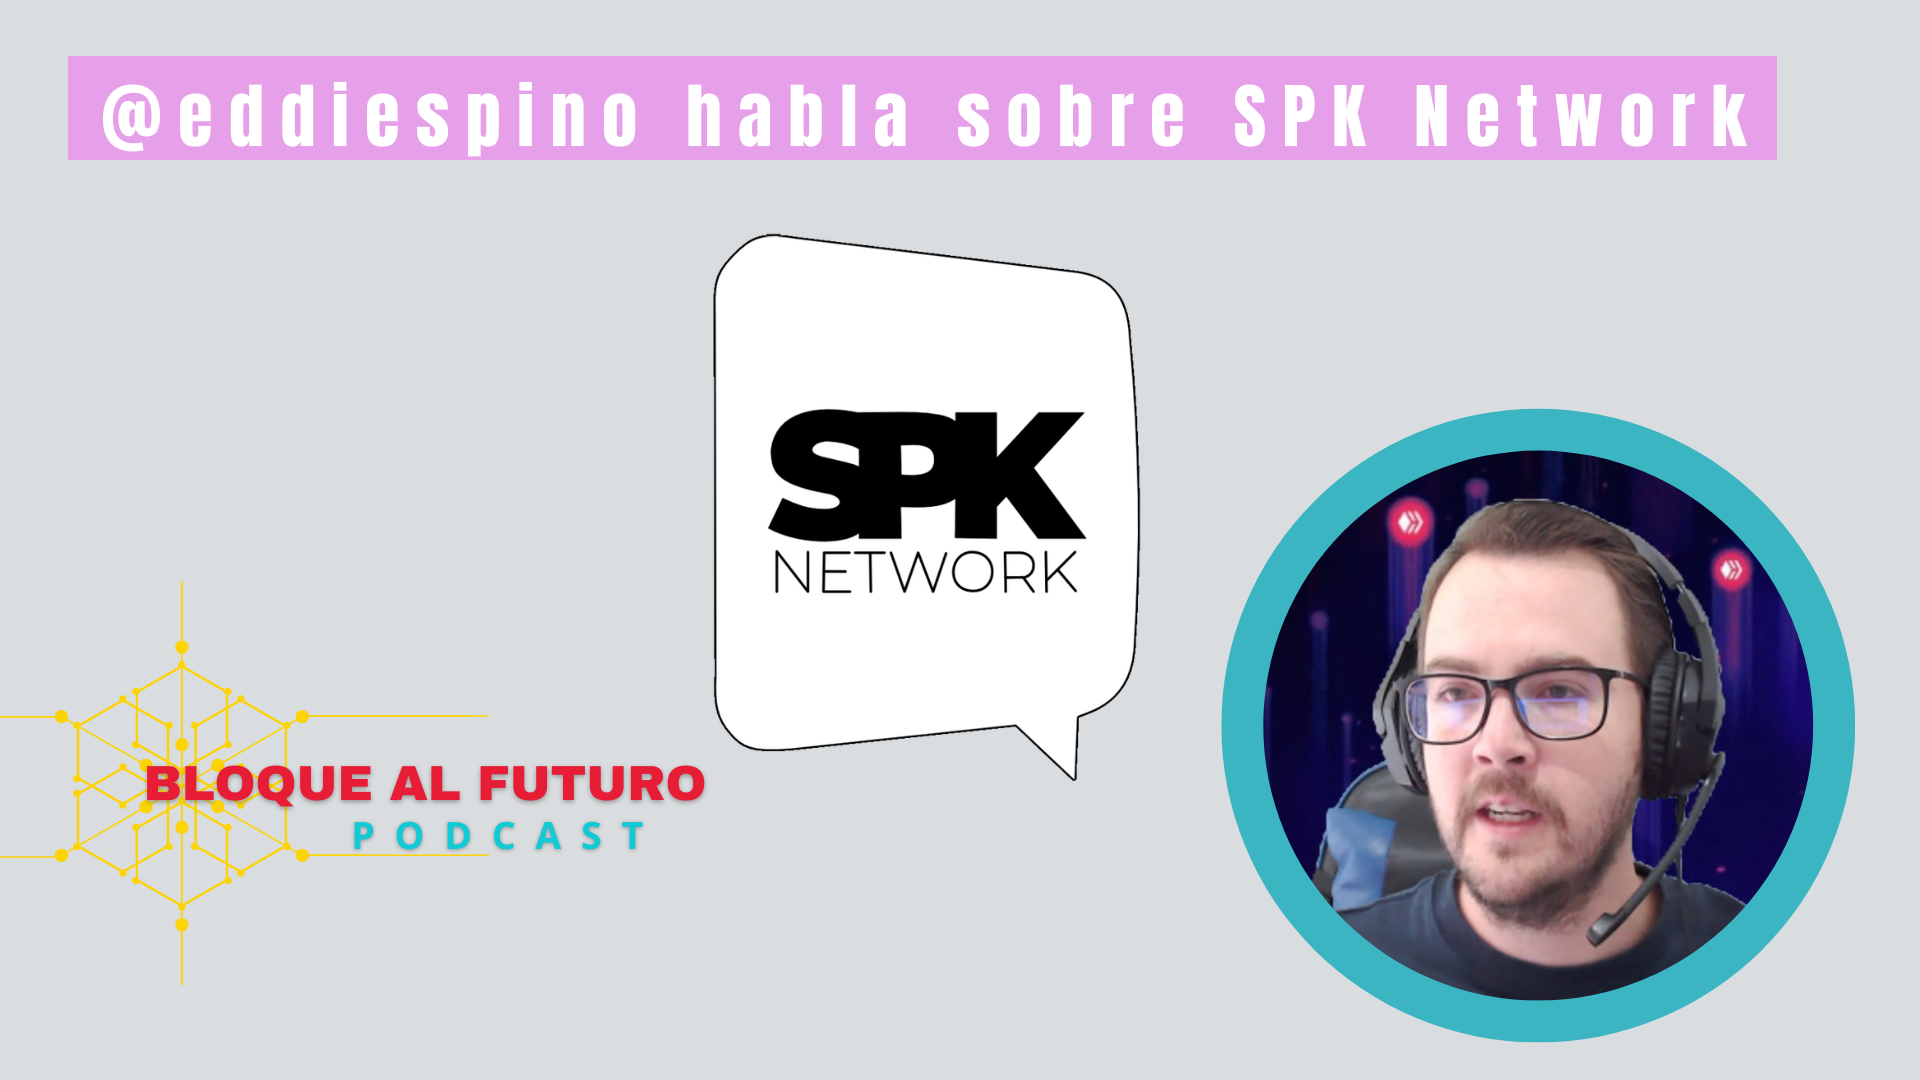 bloque al futuro podcast  - SPK Network.png